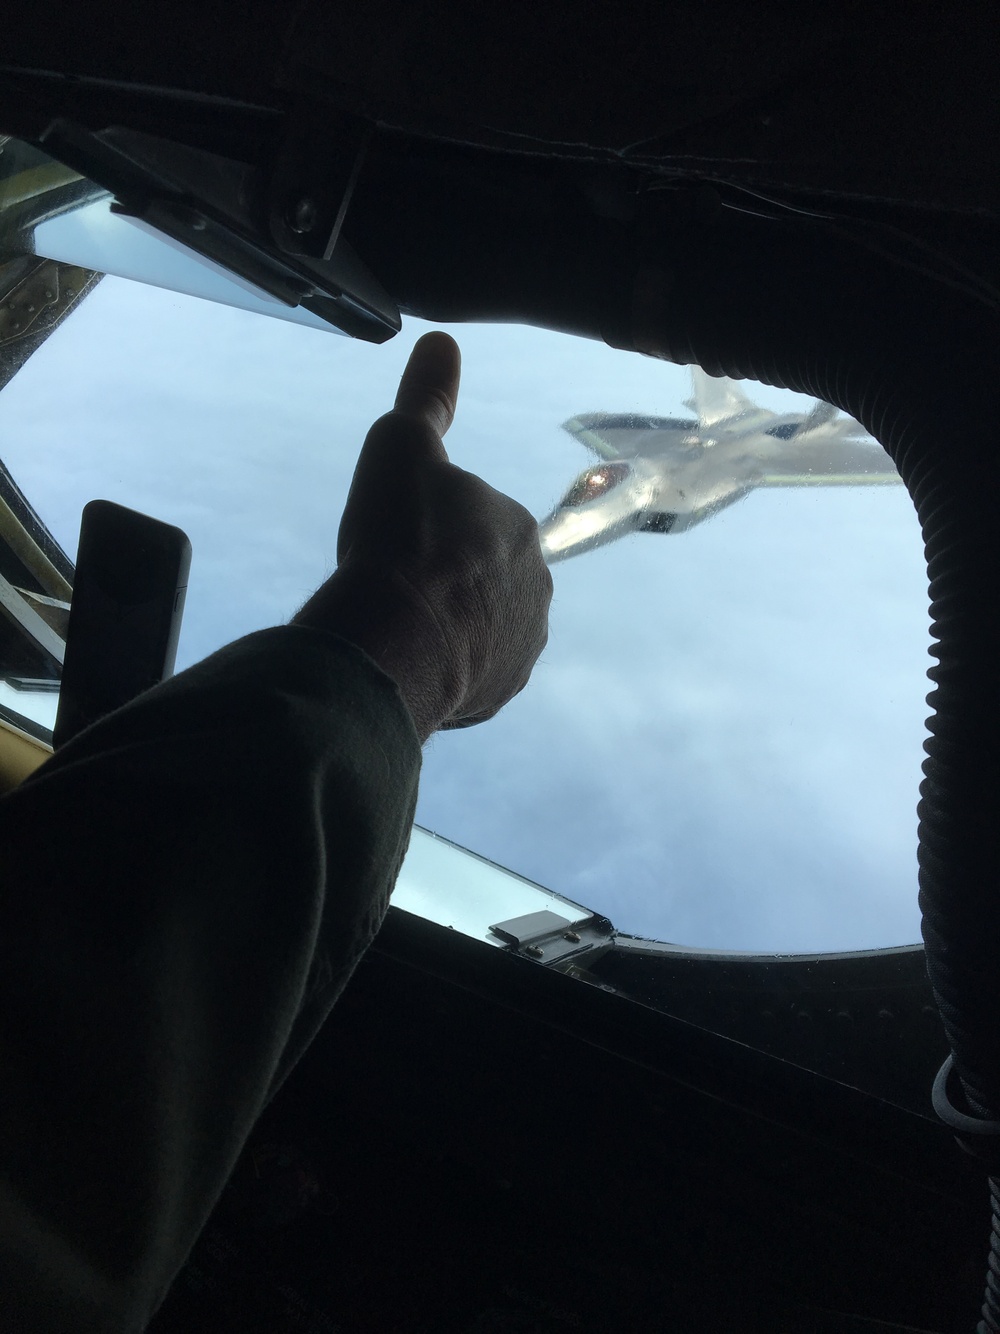 Reservists refuel Tyndall F-22 Raptor following hurricane